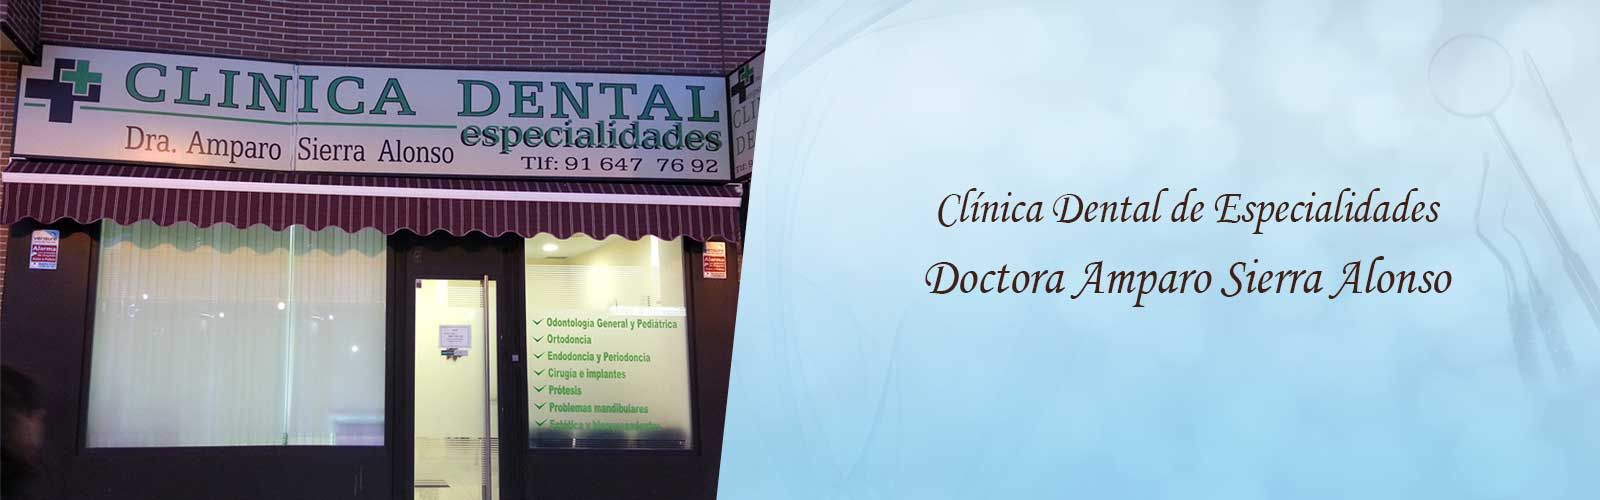 Clínica Dental de Especialidades Doctora Amparo Sierra Alonso banner inicial